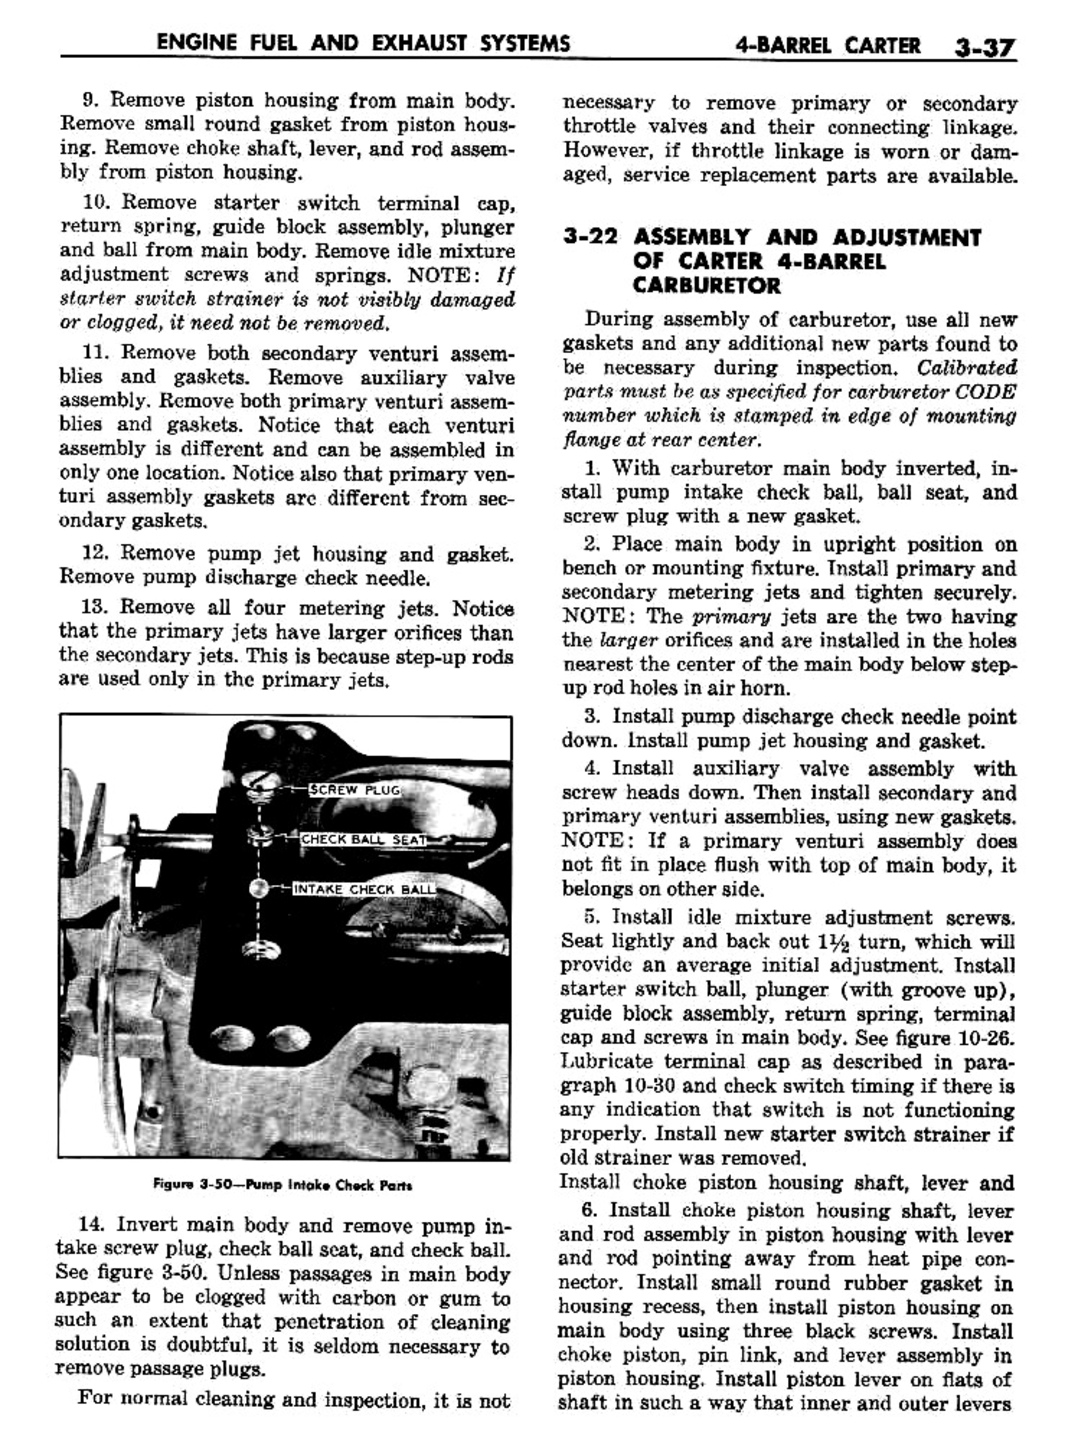 n_04 1957 Buick Shop Manual - Engine Fuel & Exhaust-037-037.jpg